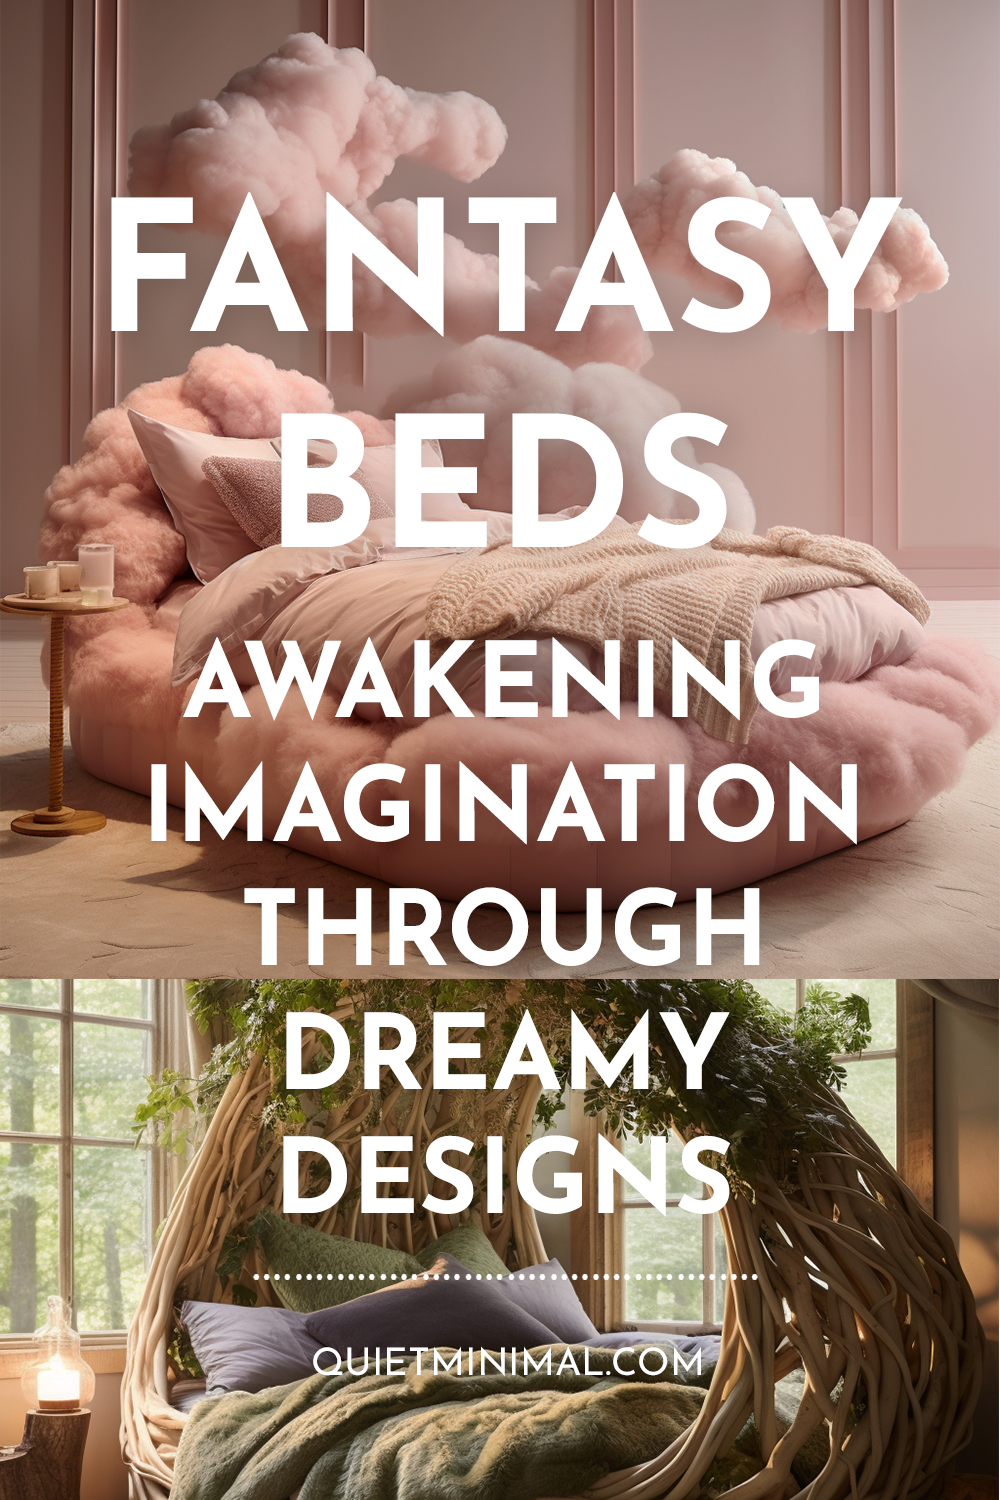 Dreamy designs of fantasy beds awaken imagination